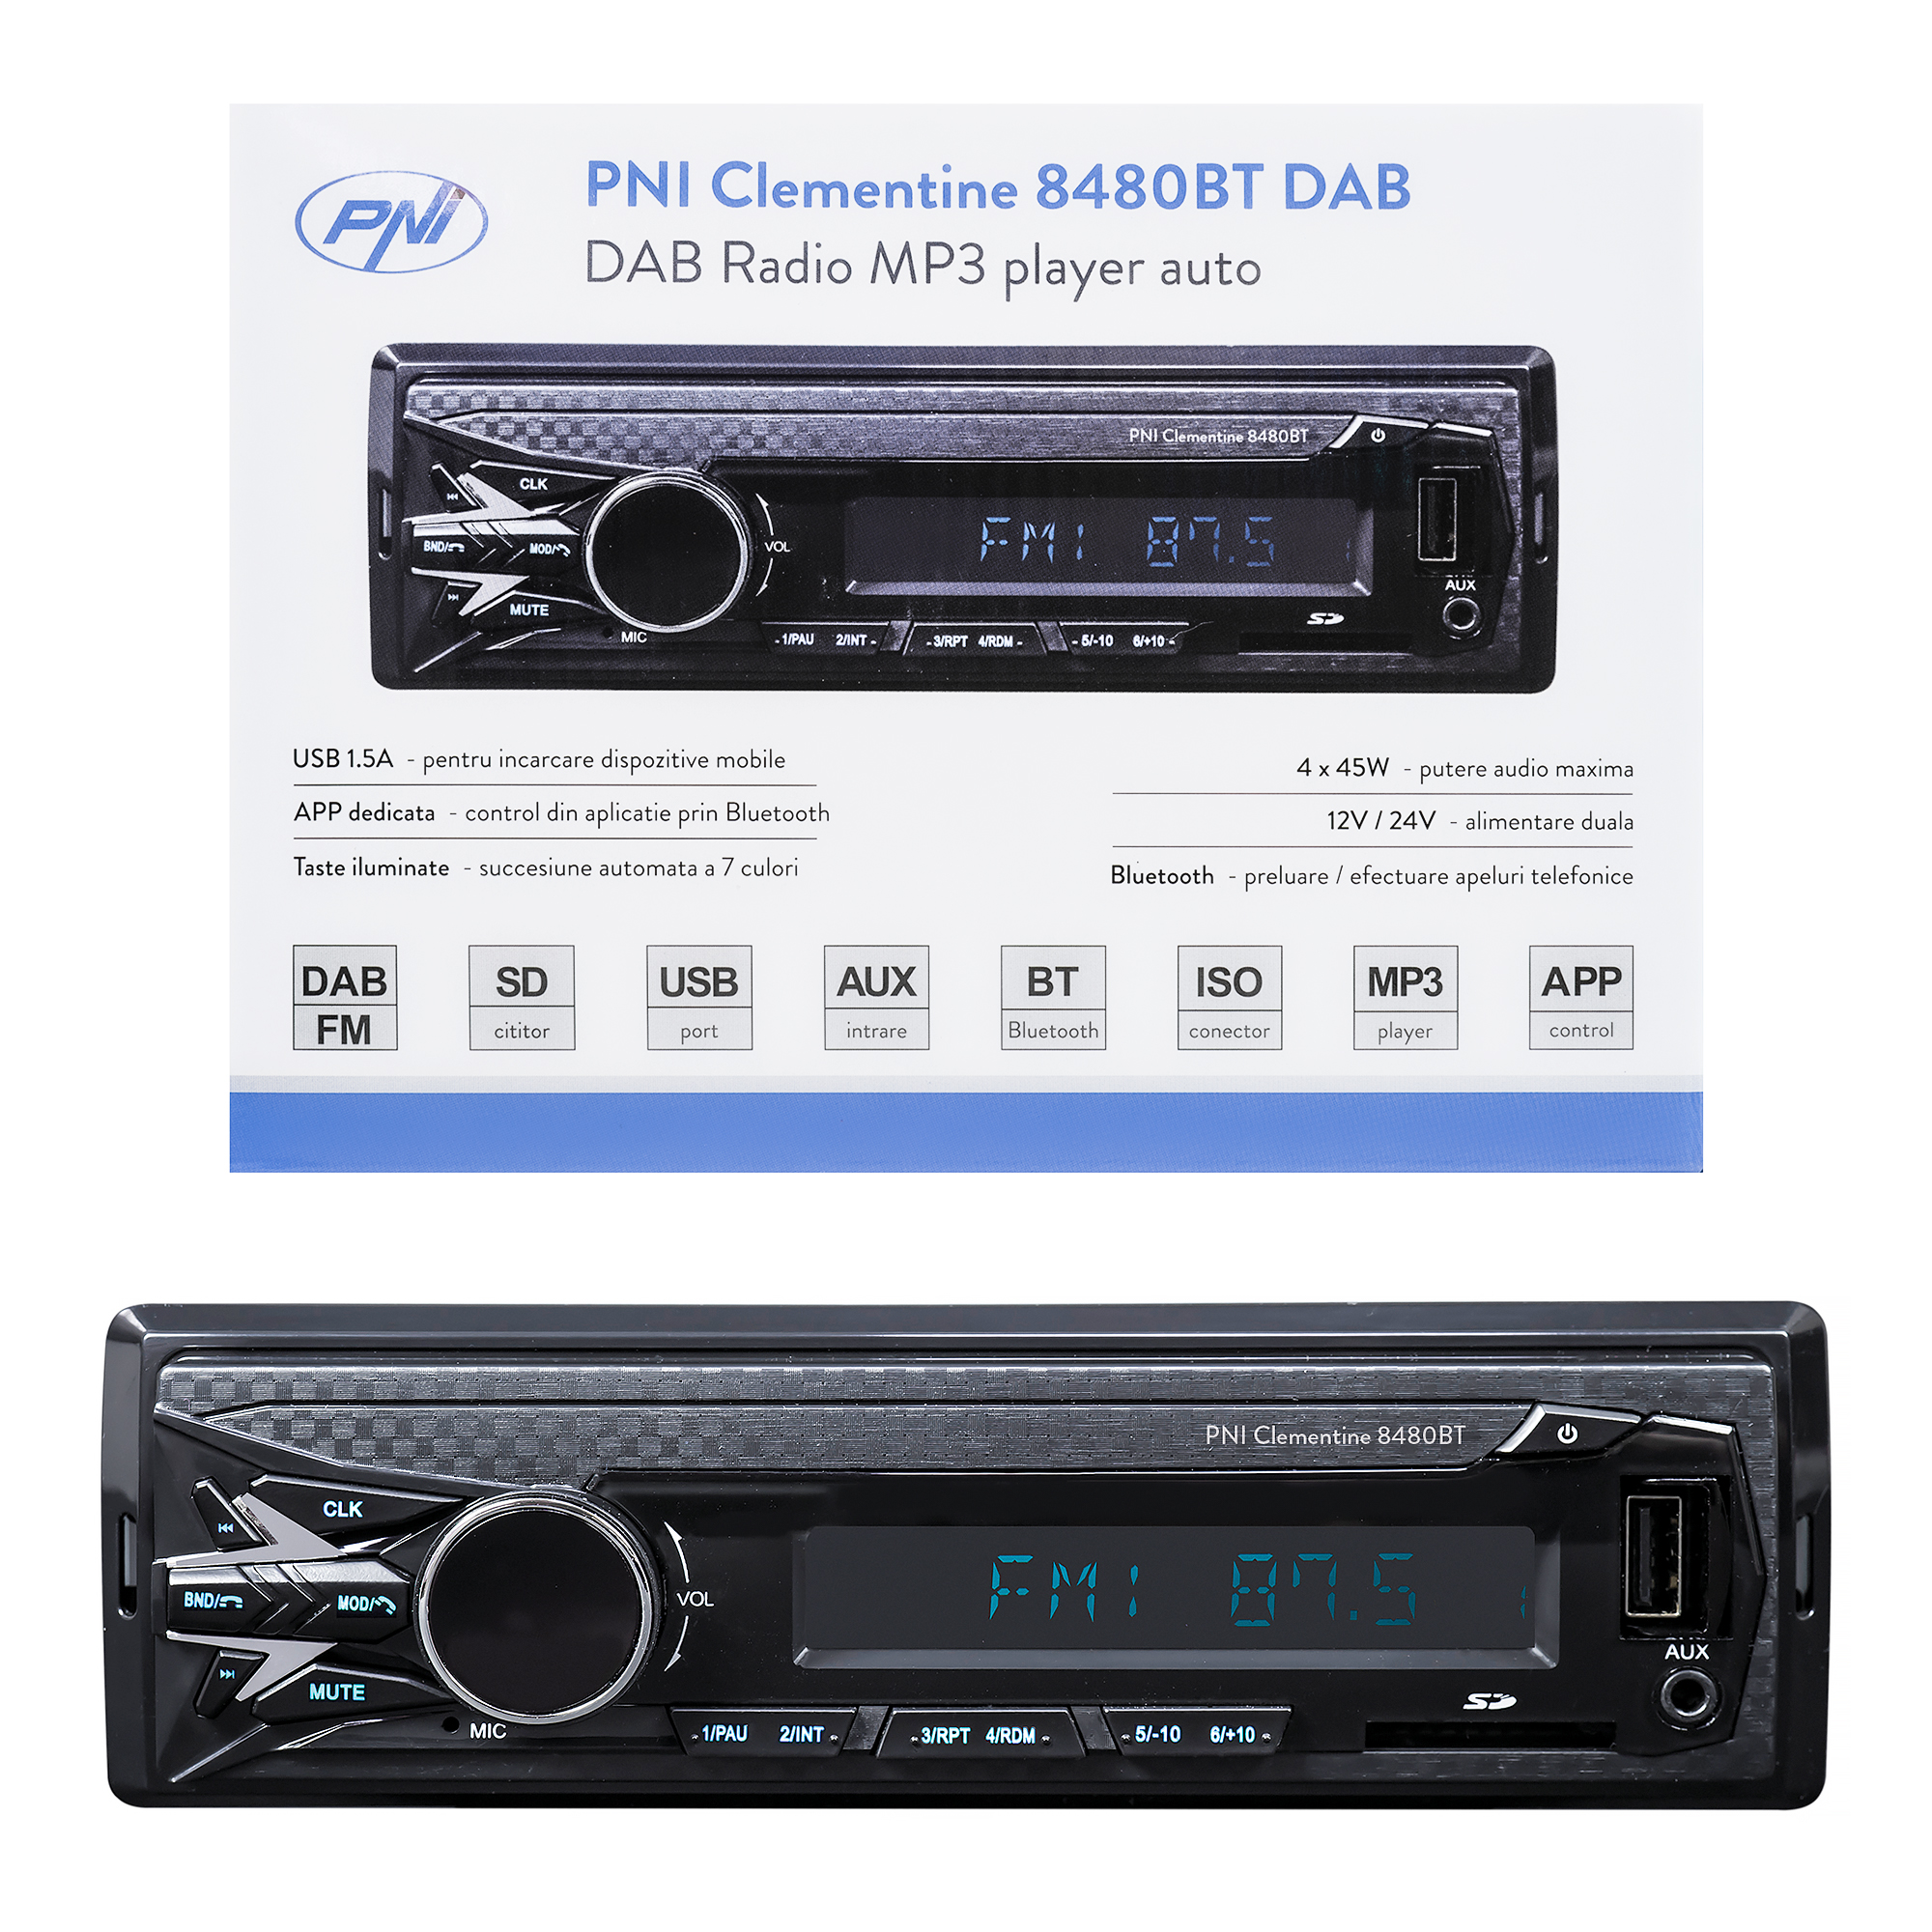 DAB si RDS radio MP3 player auto PNI Clementine 8480BT 4x45w, 12/24V, 1 DIN, cu SD, USB, AUX, RCA, Bluetooth si USB 1.5A pentru incarcare telefon image7